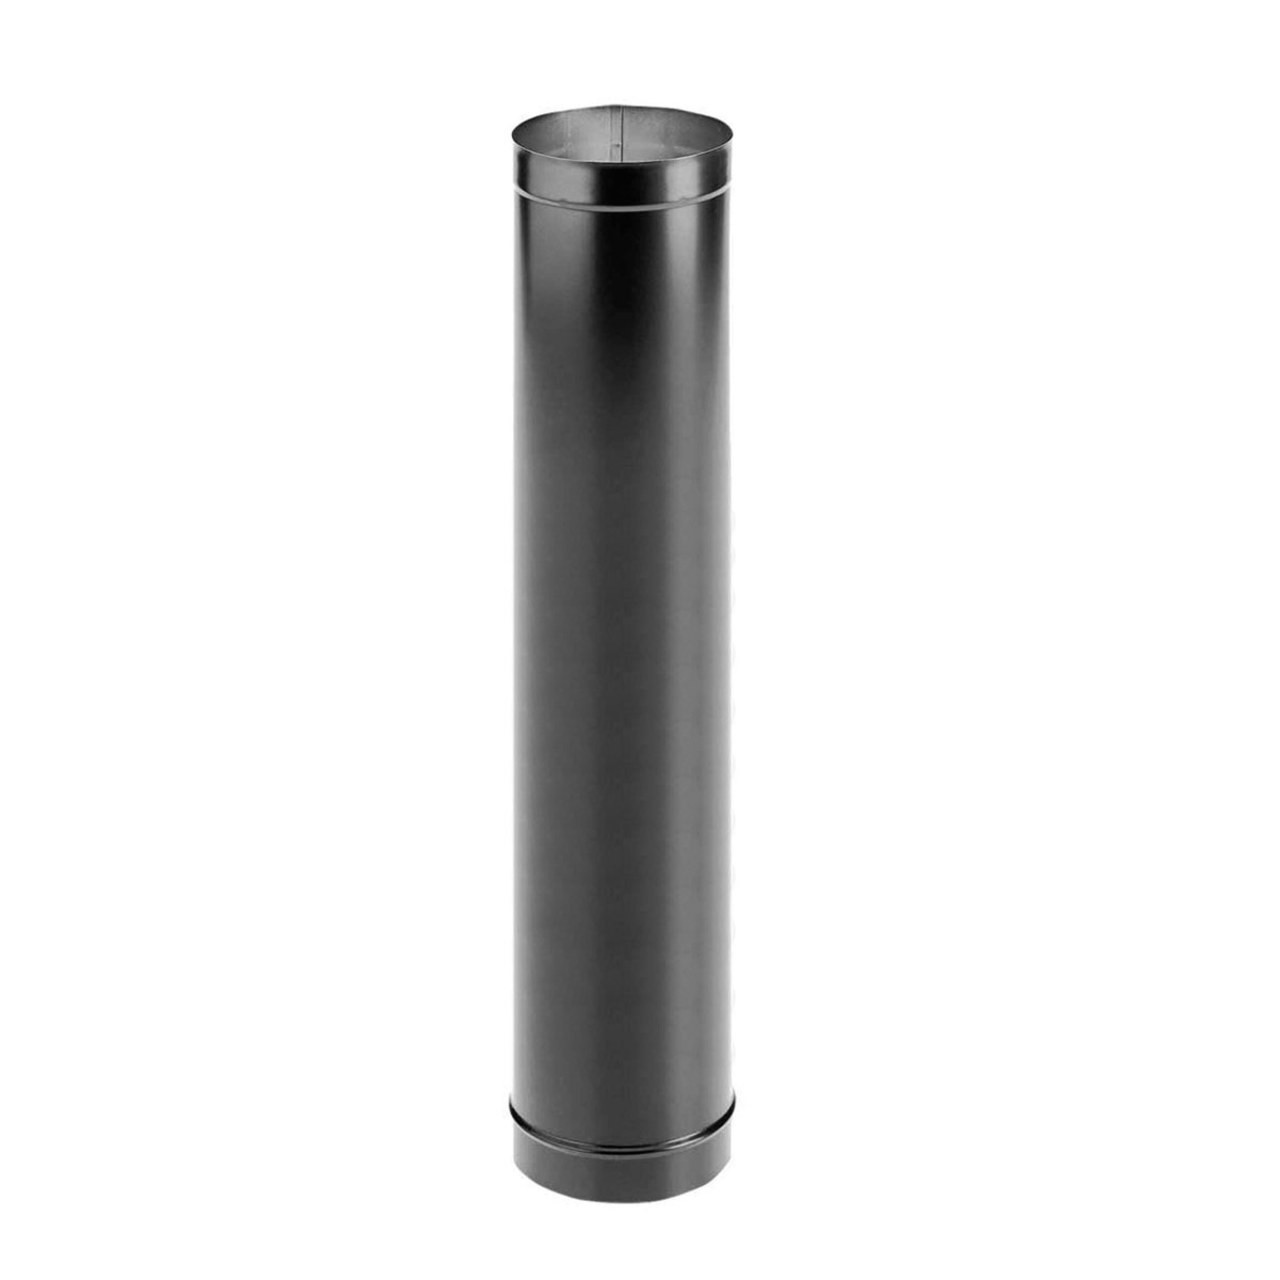 IMPERIAL 6-in x 6-in Black Steel Stove Pipe Slip Connector in the